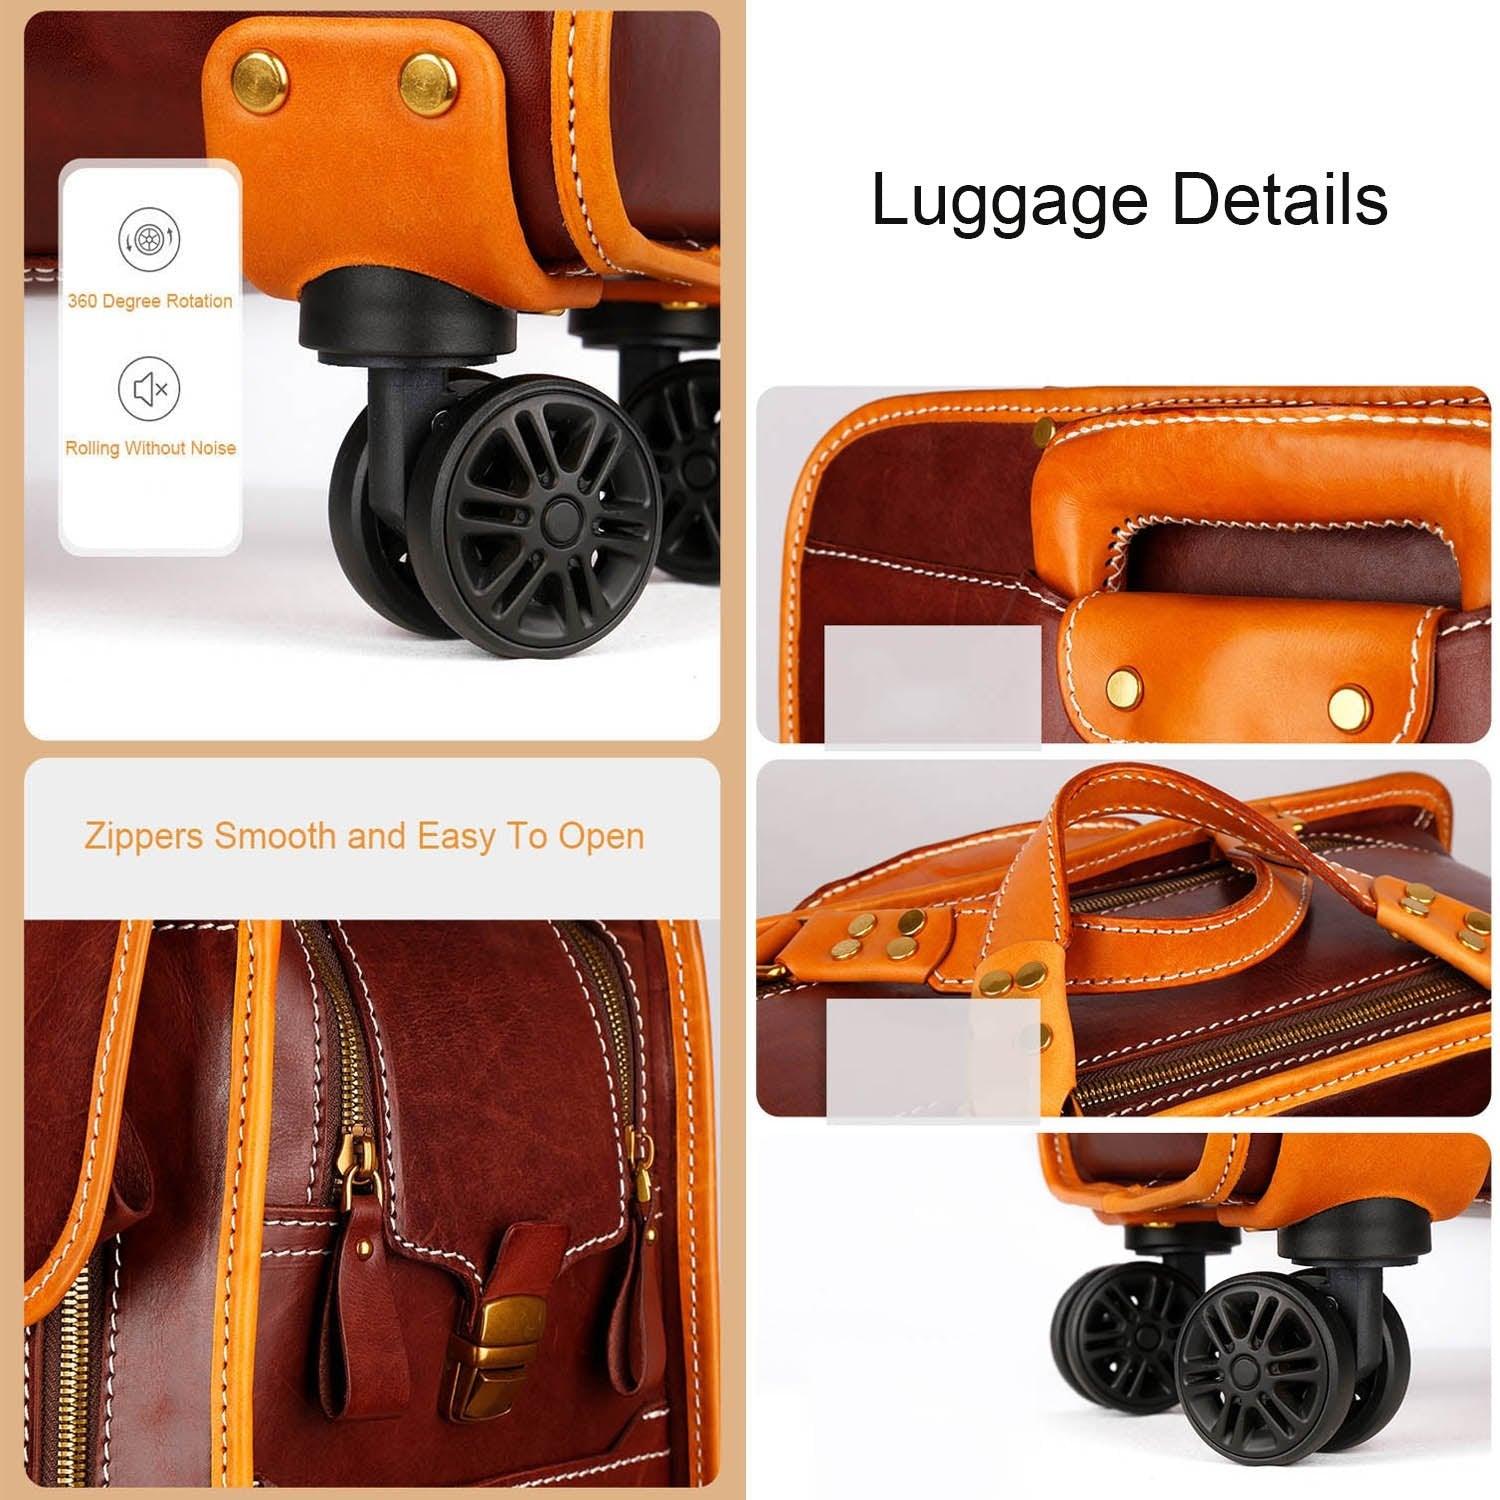 Woosir Vintage Leather Suitcase 20 Inch Travel Luggage